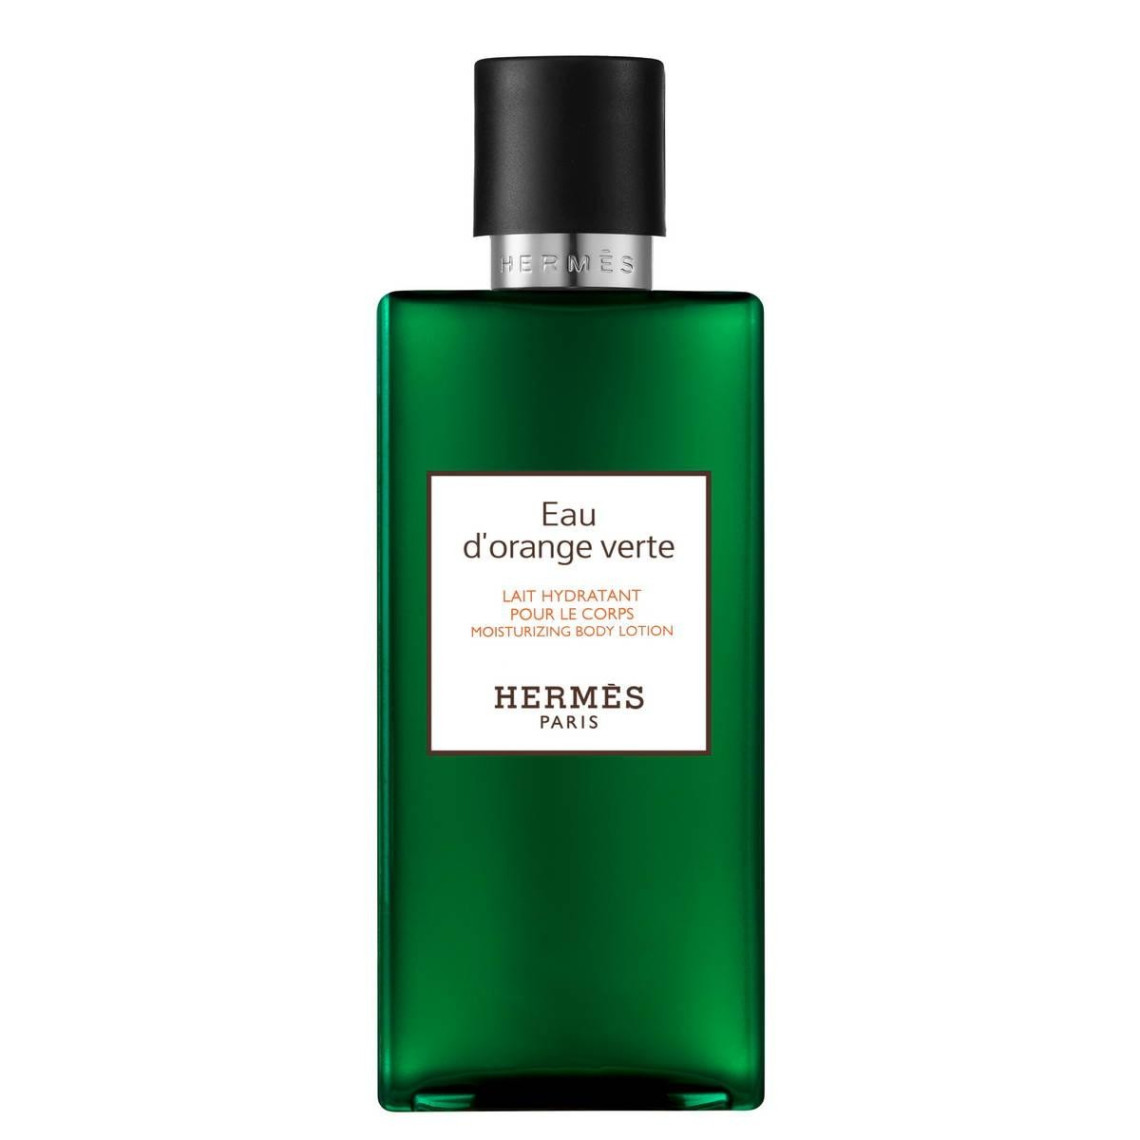 Hermes: perfume at